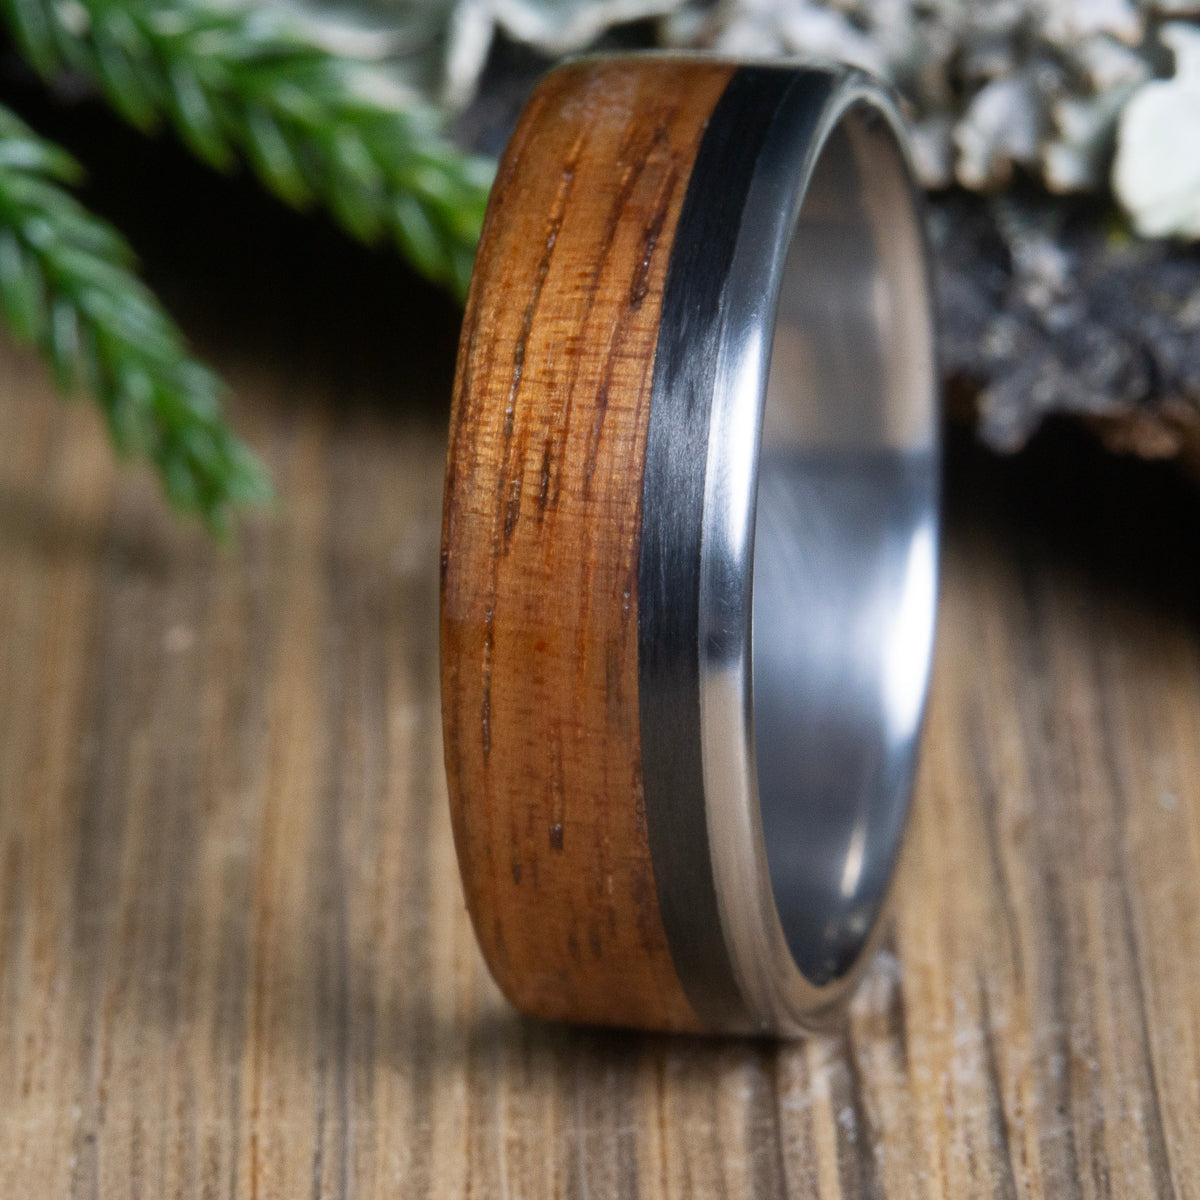 Koa wood ring, carbon fiber and wooden inlay